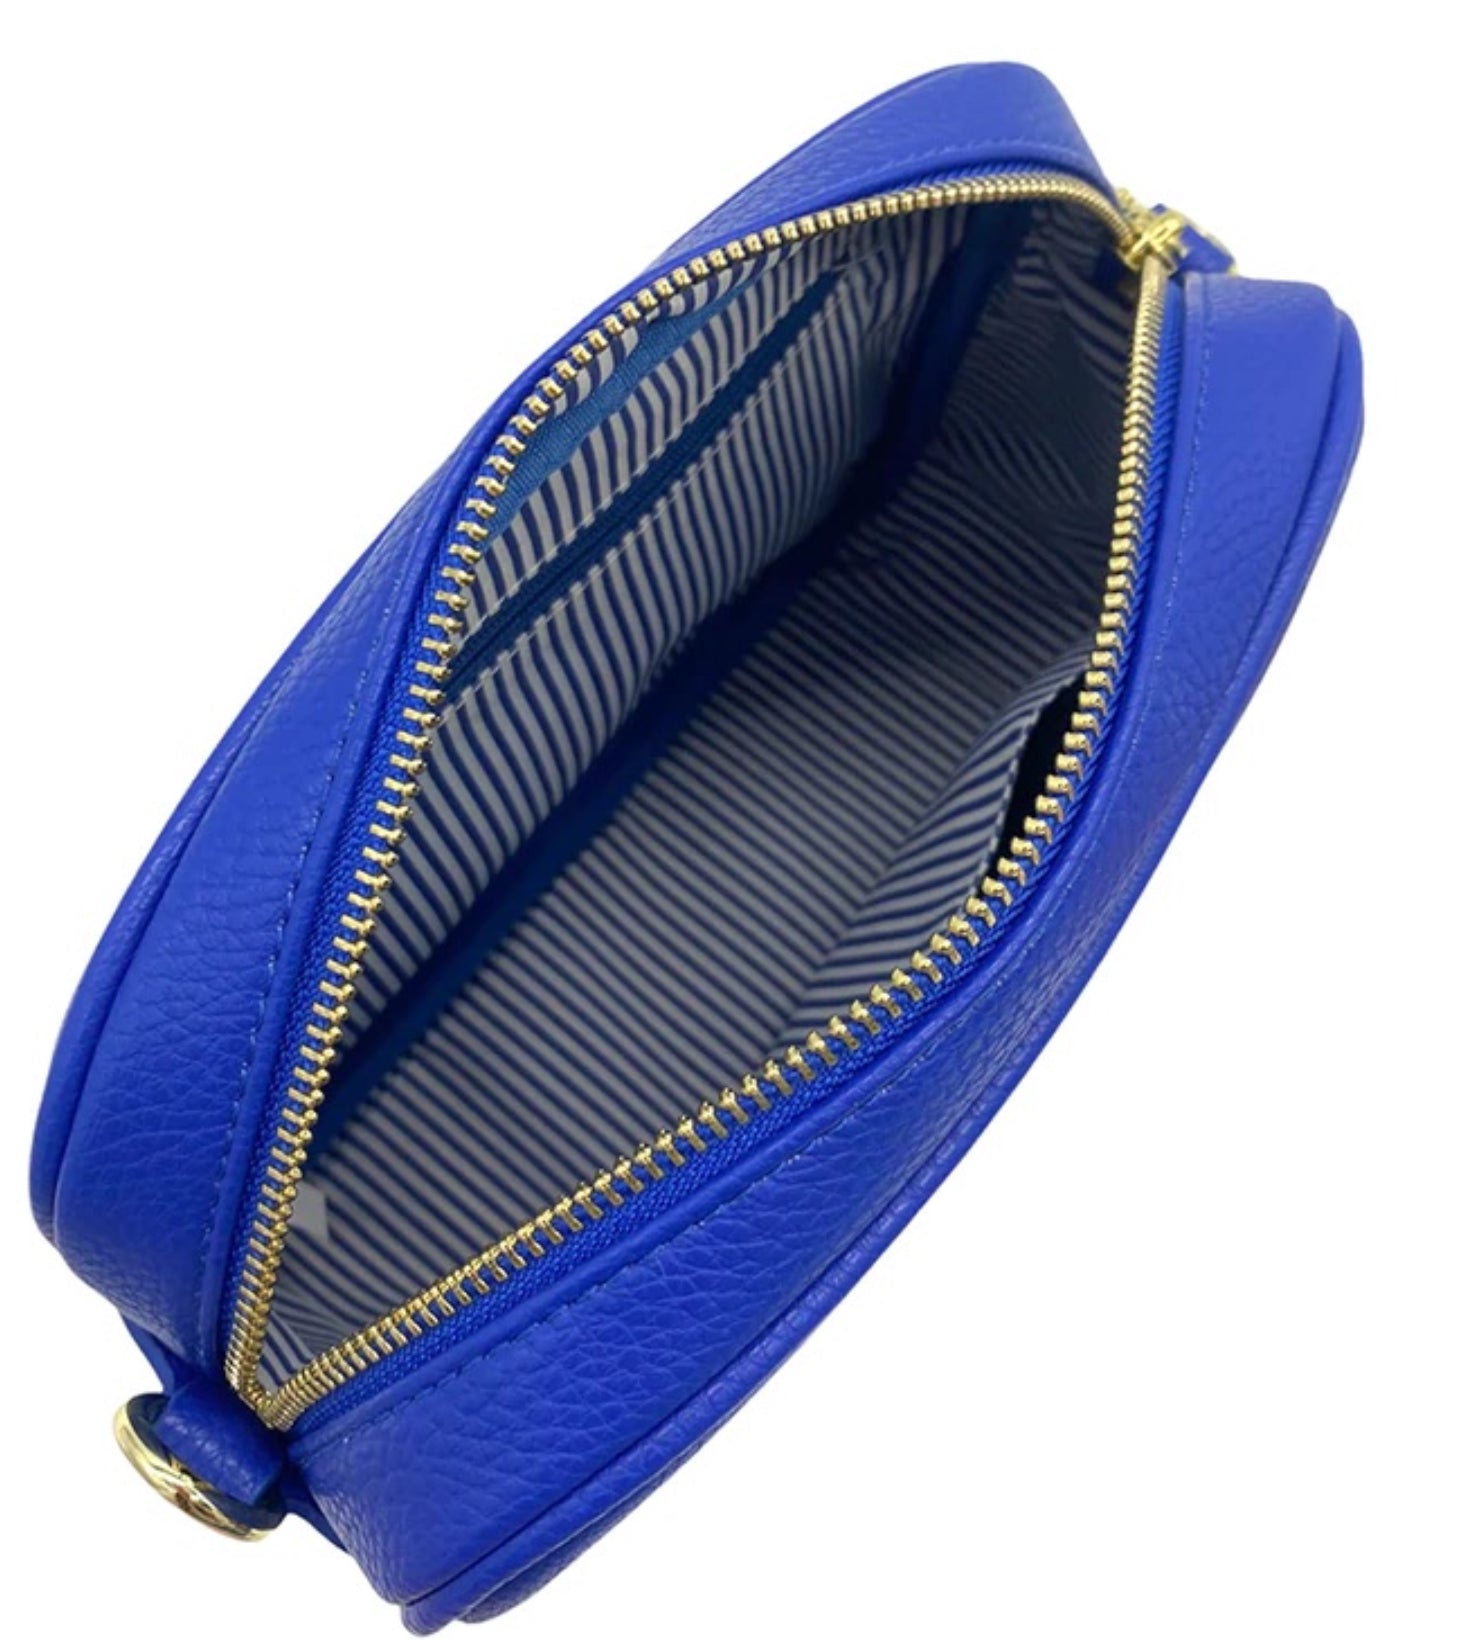 Italian Leather Clutch Crossbody Bag - Periwinkle Blue